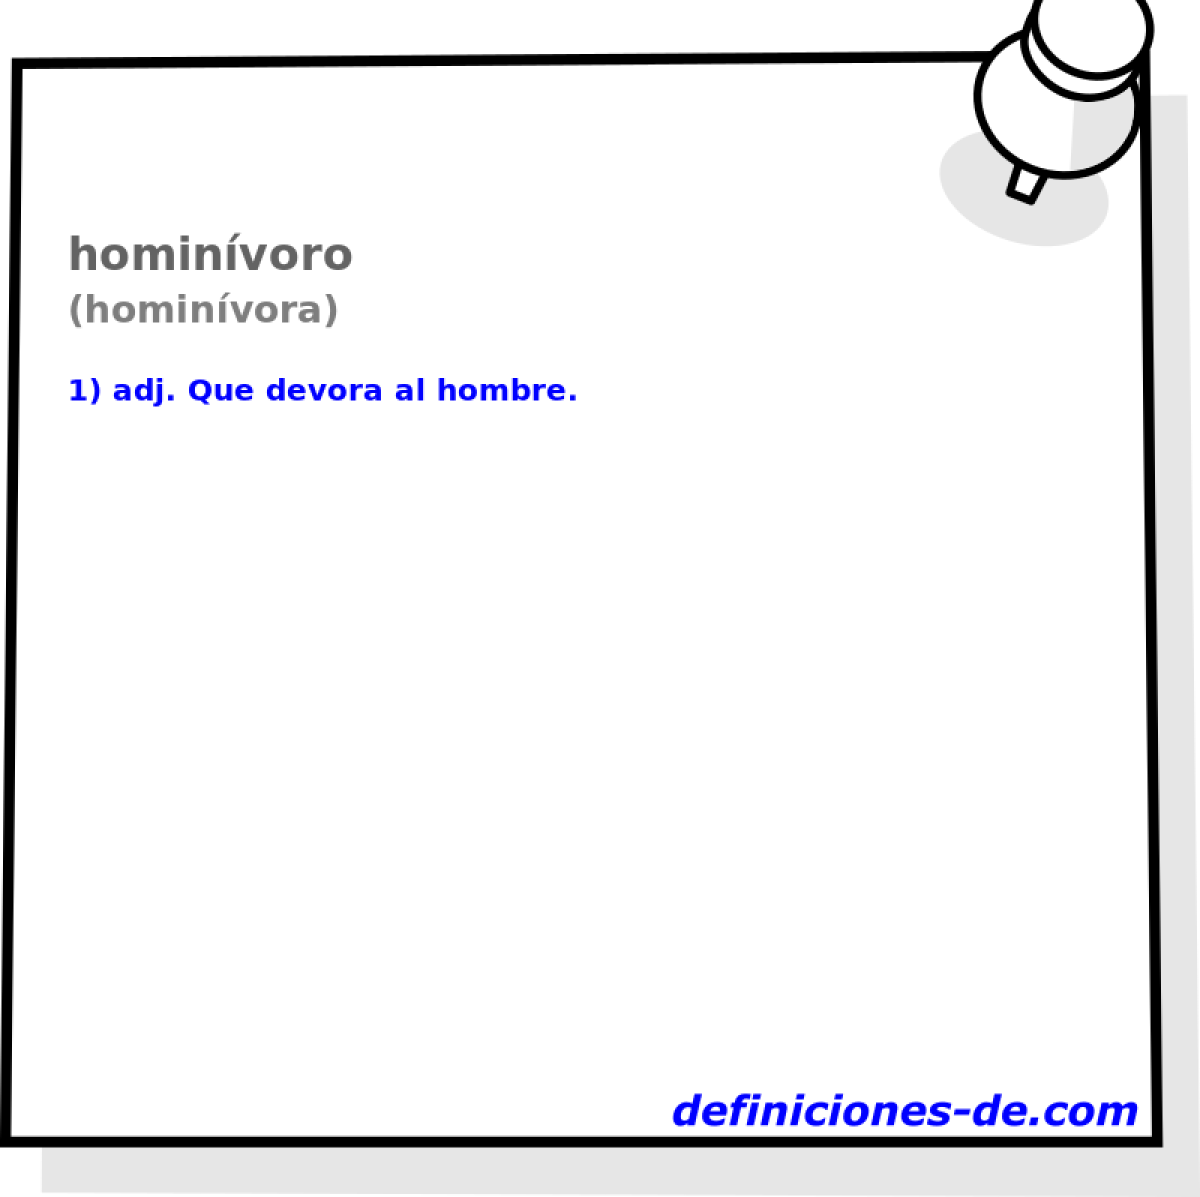 hominvoro (hominvora)